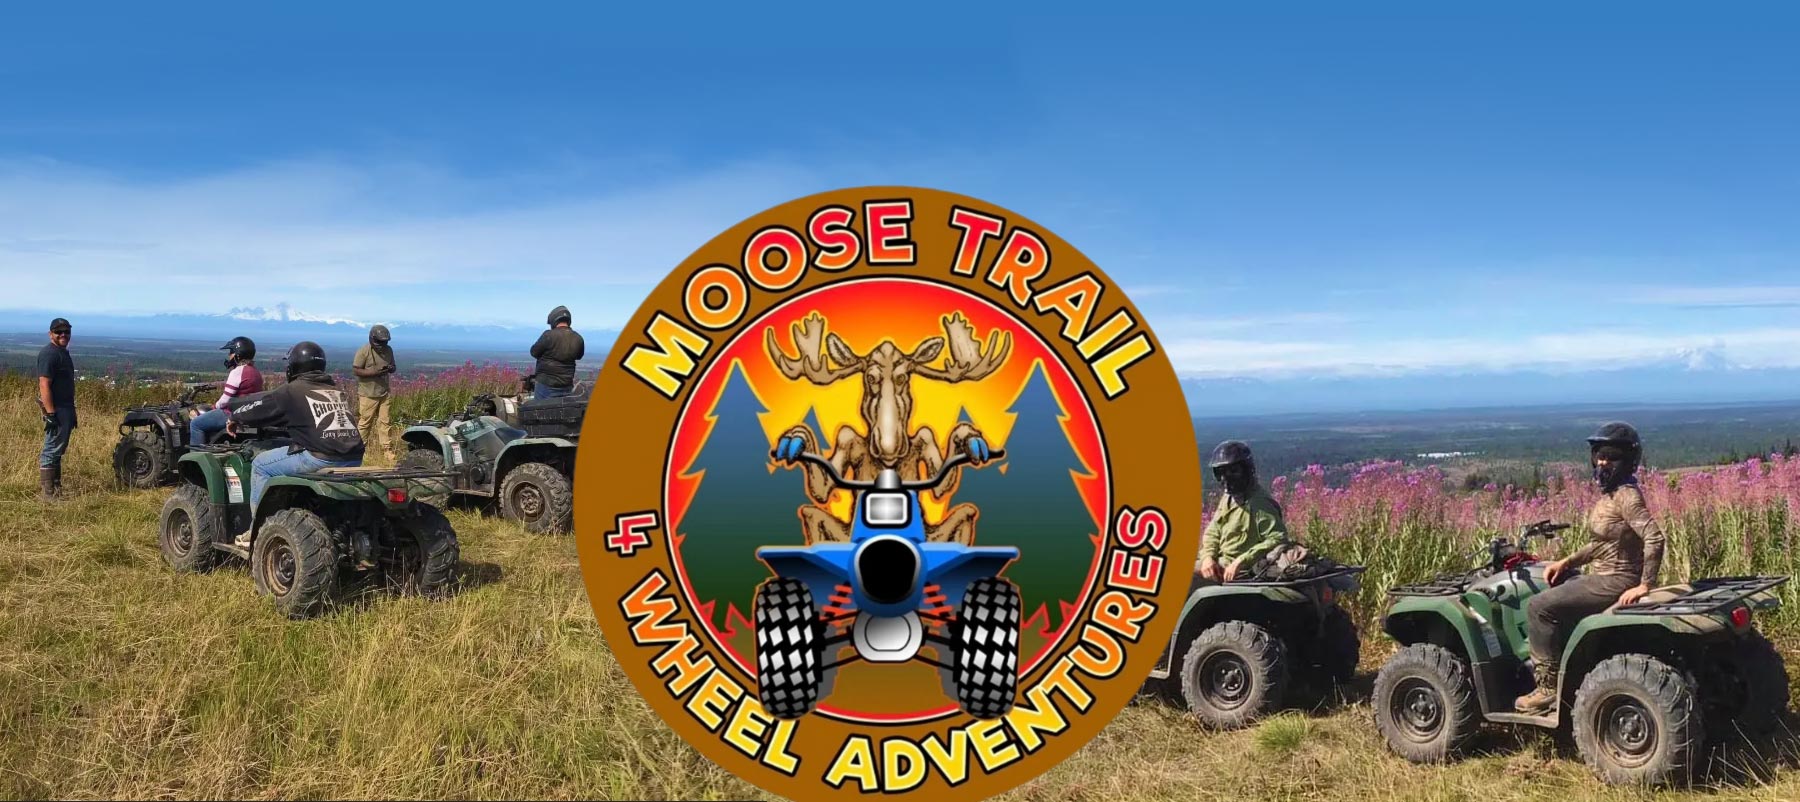 Moose Trail 4 Wheel Adventures